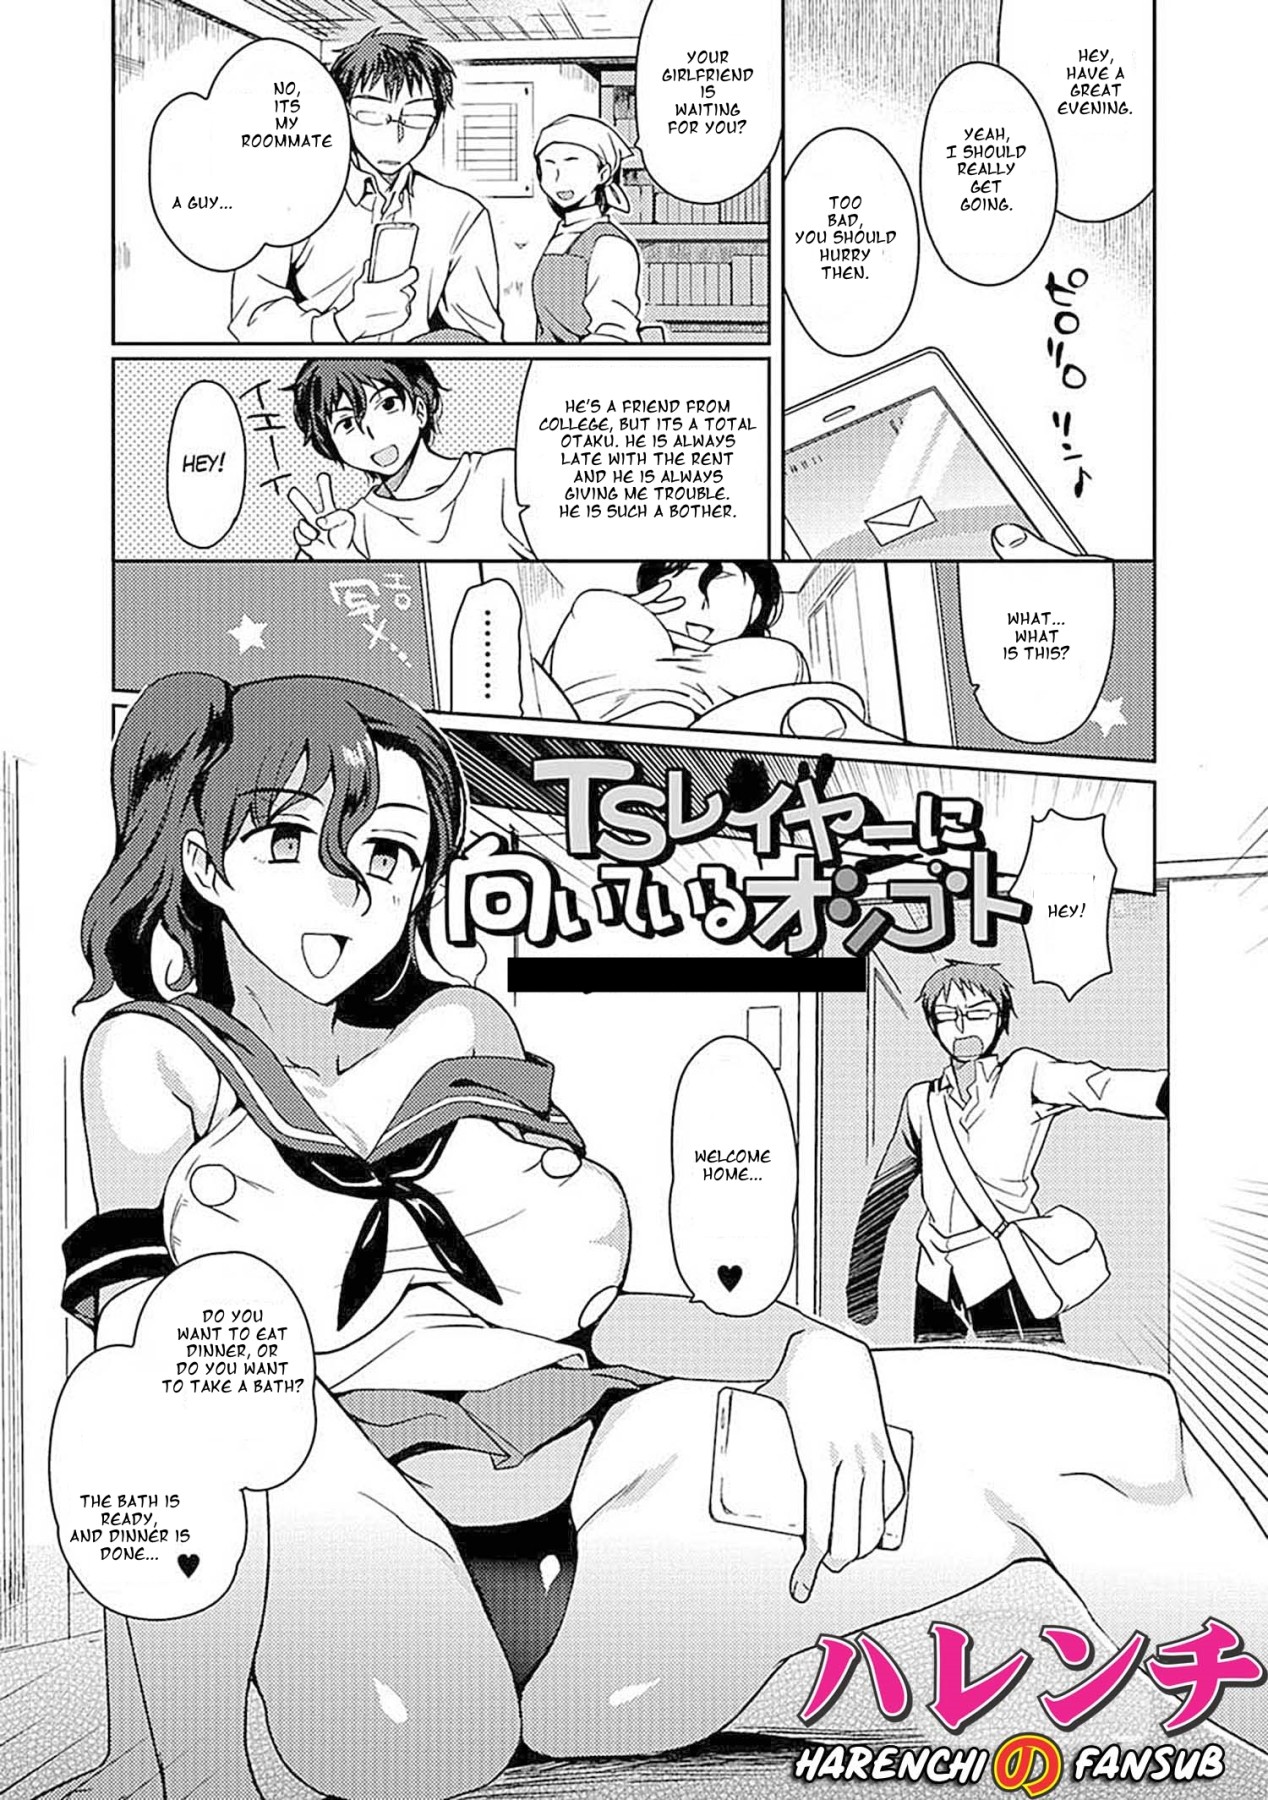 Hentai Manga Comic-A Job For a TS Cosplayer-Read-1